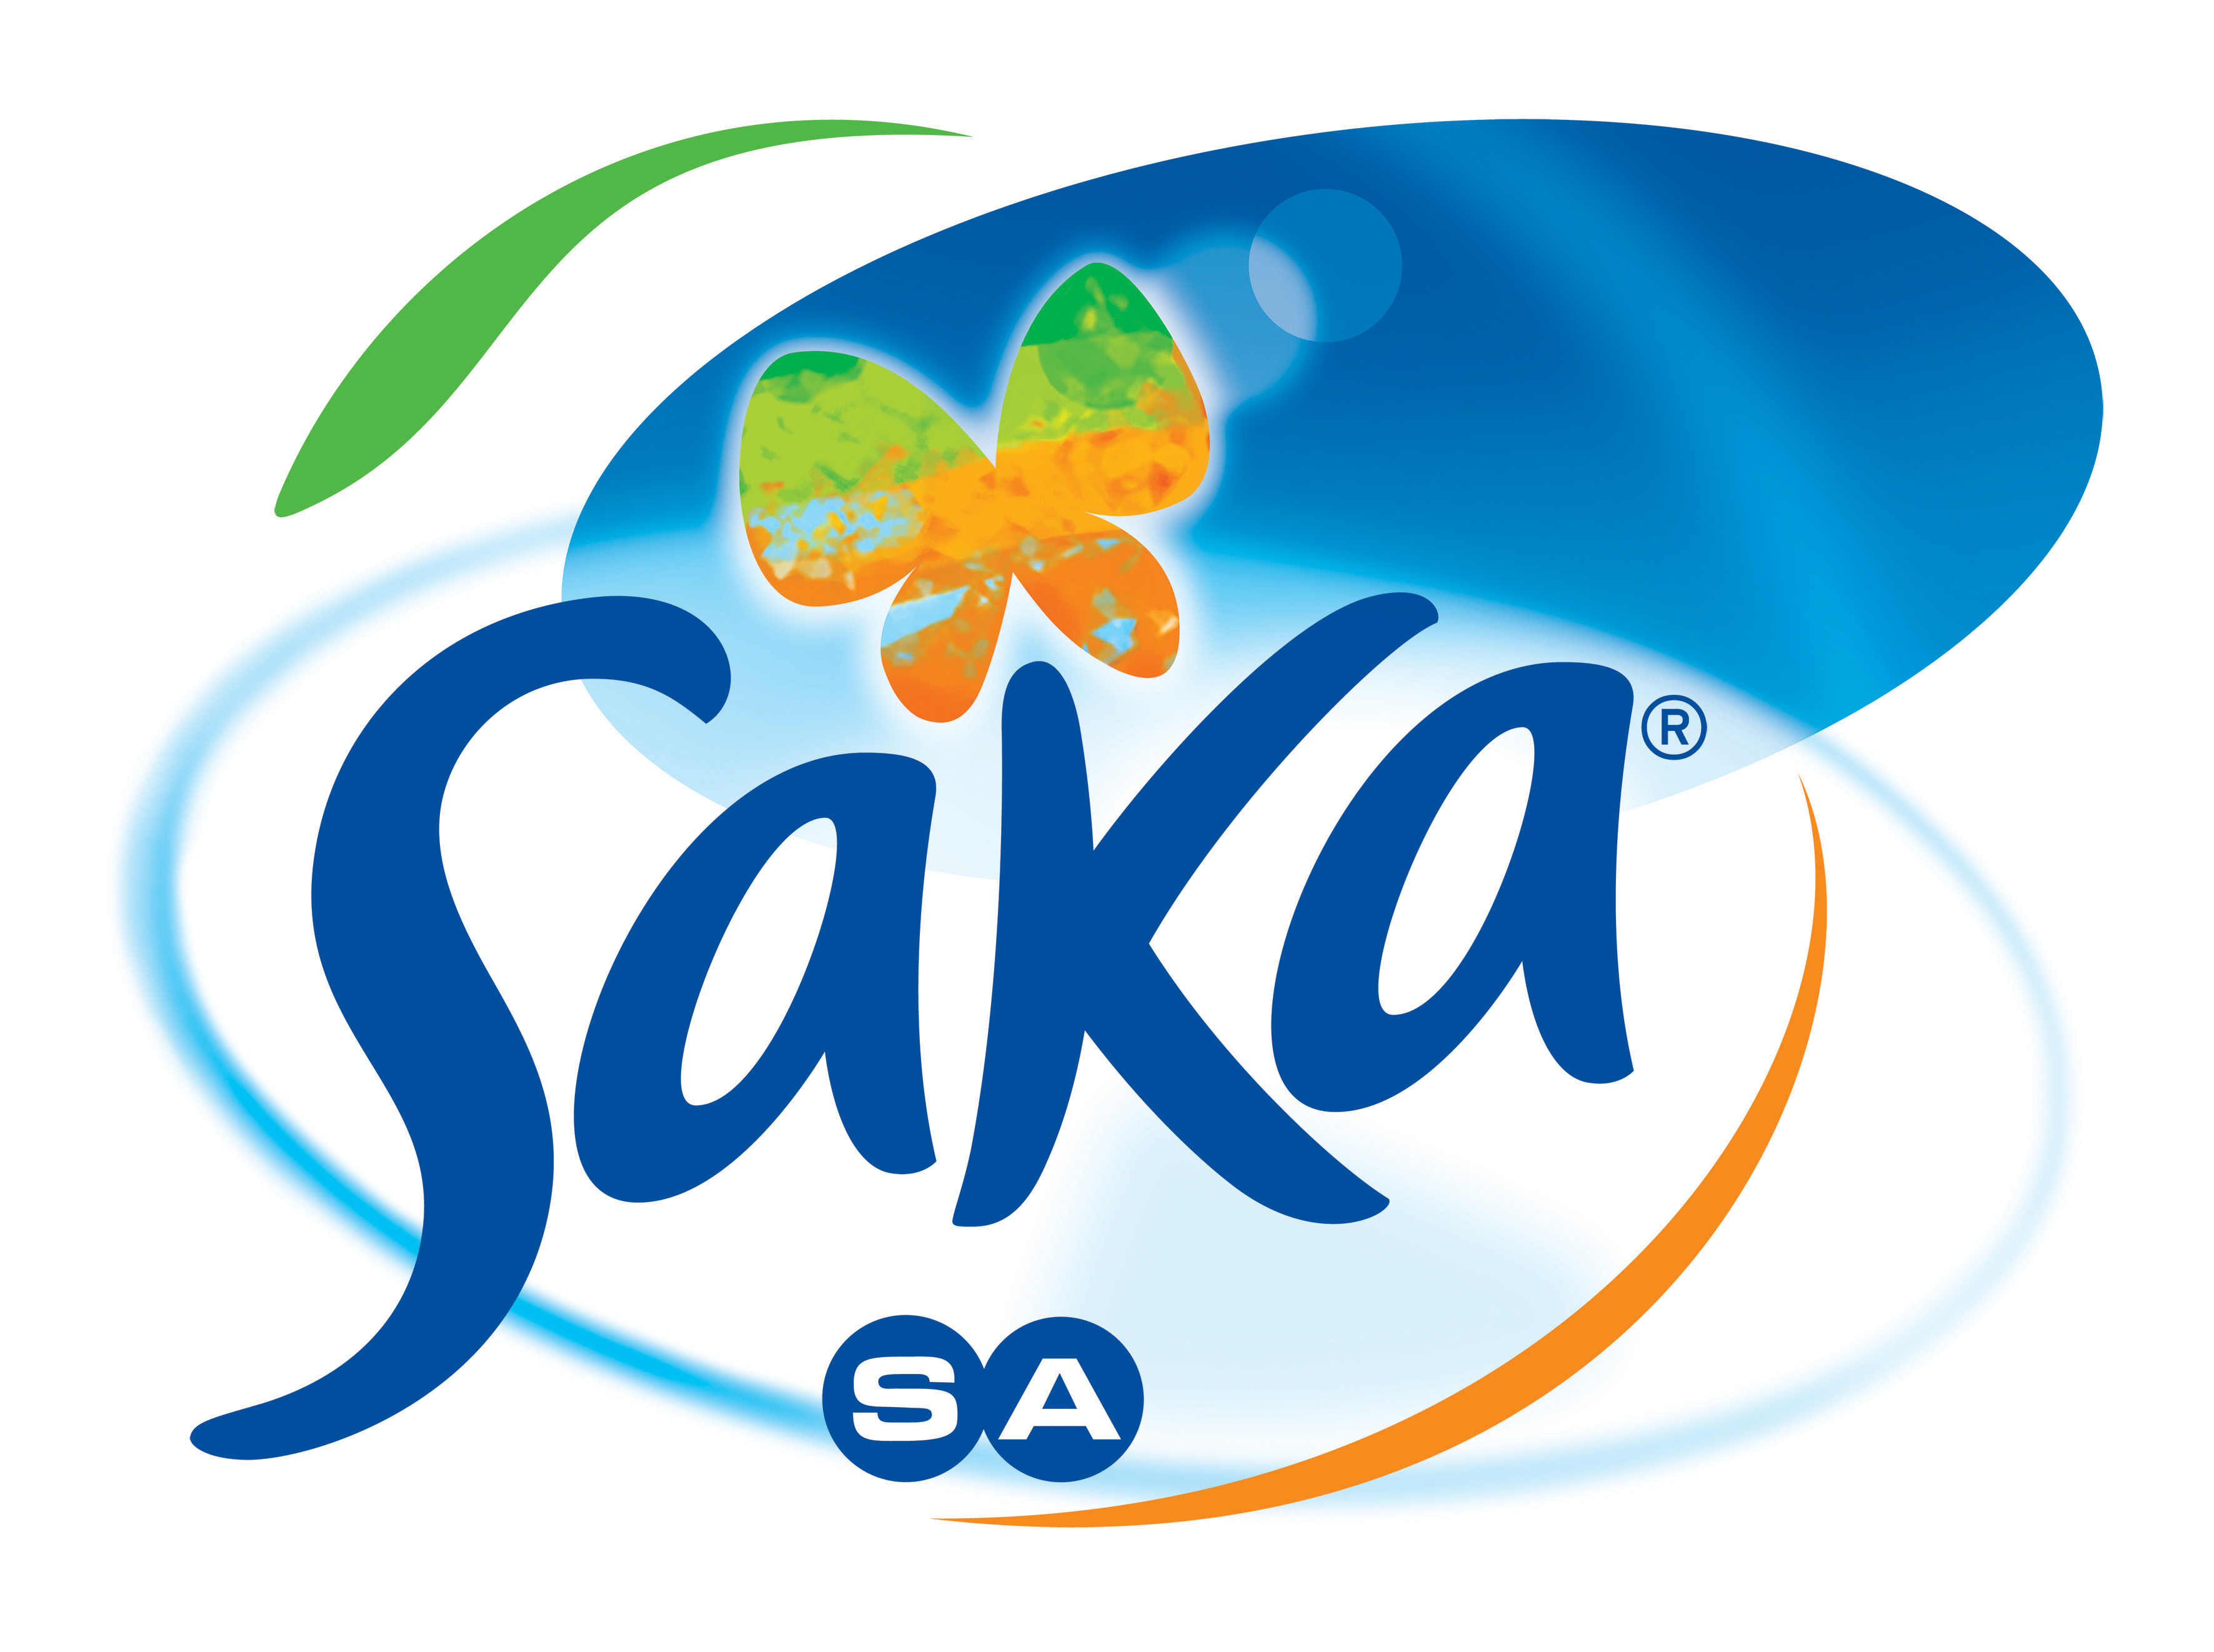 Old niig su. Su логотип. Вода saka. Sakina логотип. Саки лого.